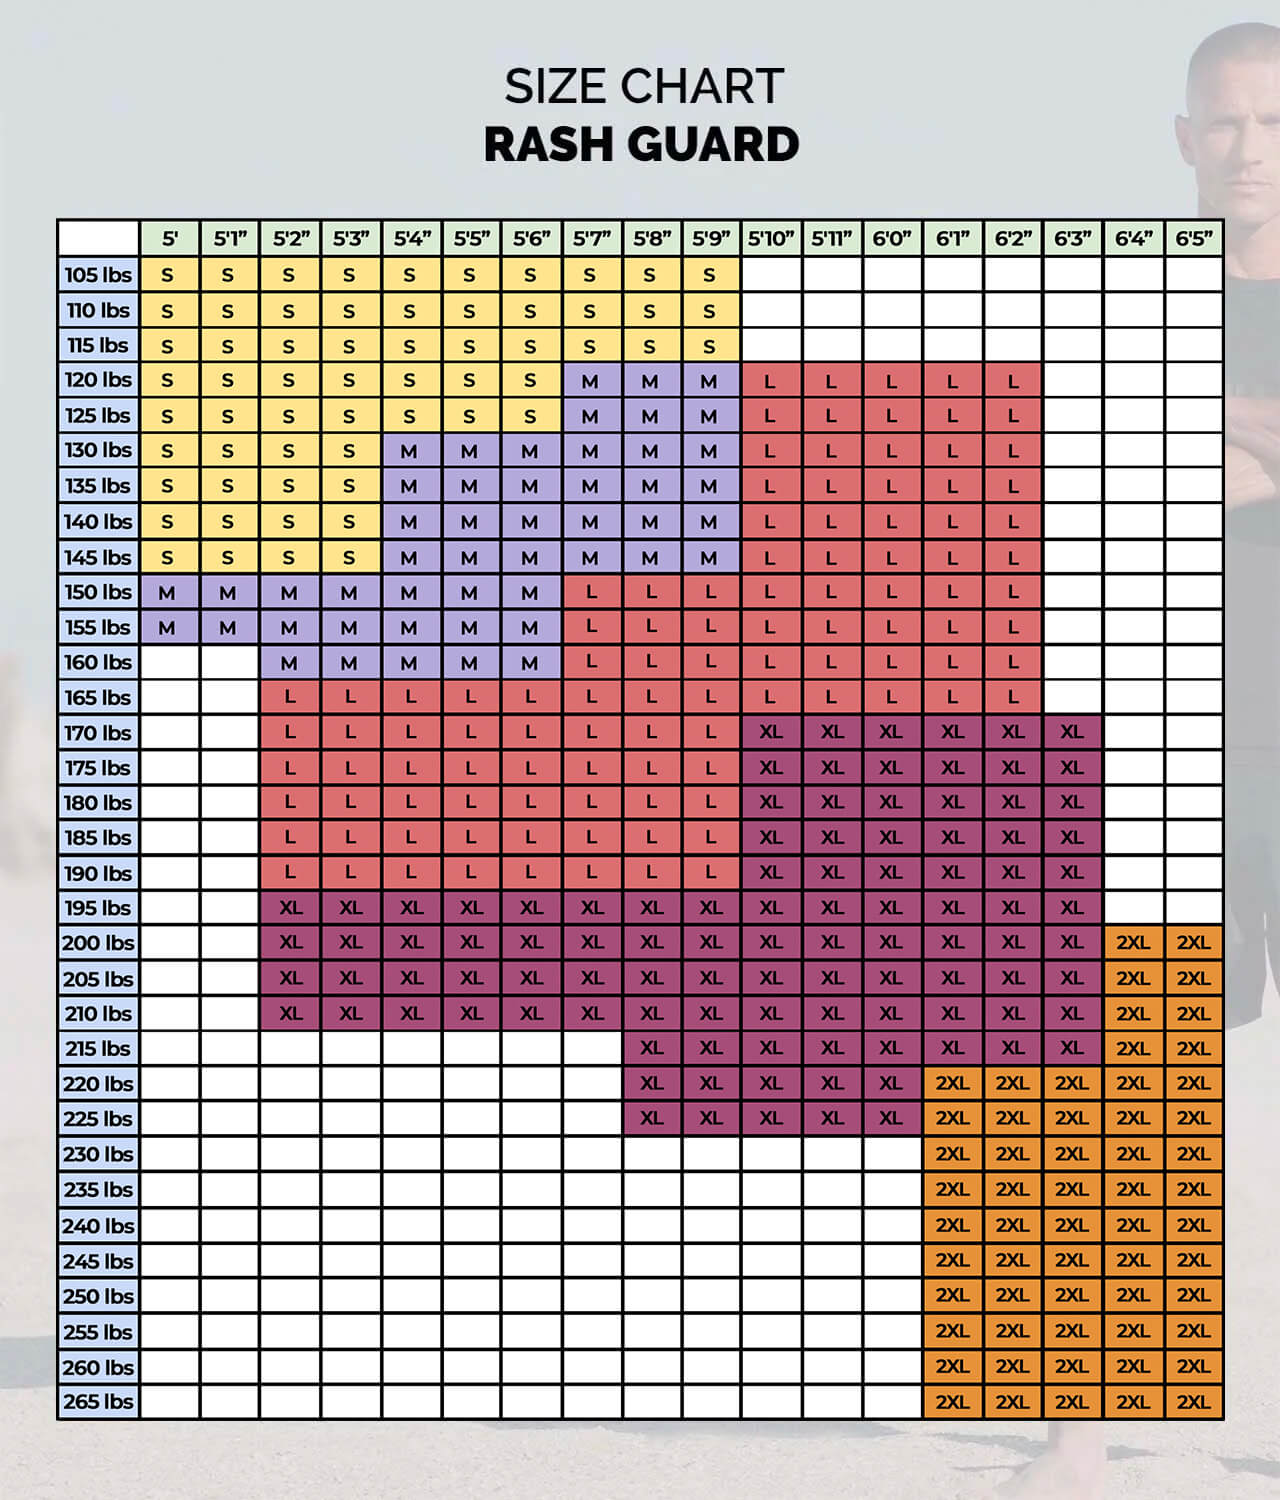 Men's Standard Purple Short Sleeve Jiu Jitsu BJJ Rash Guard